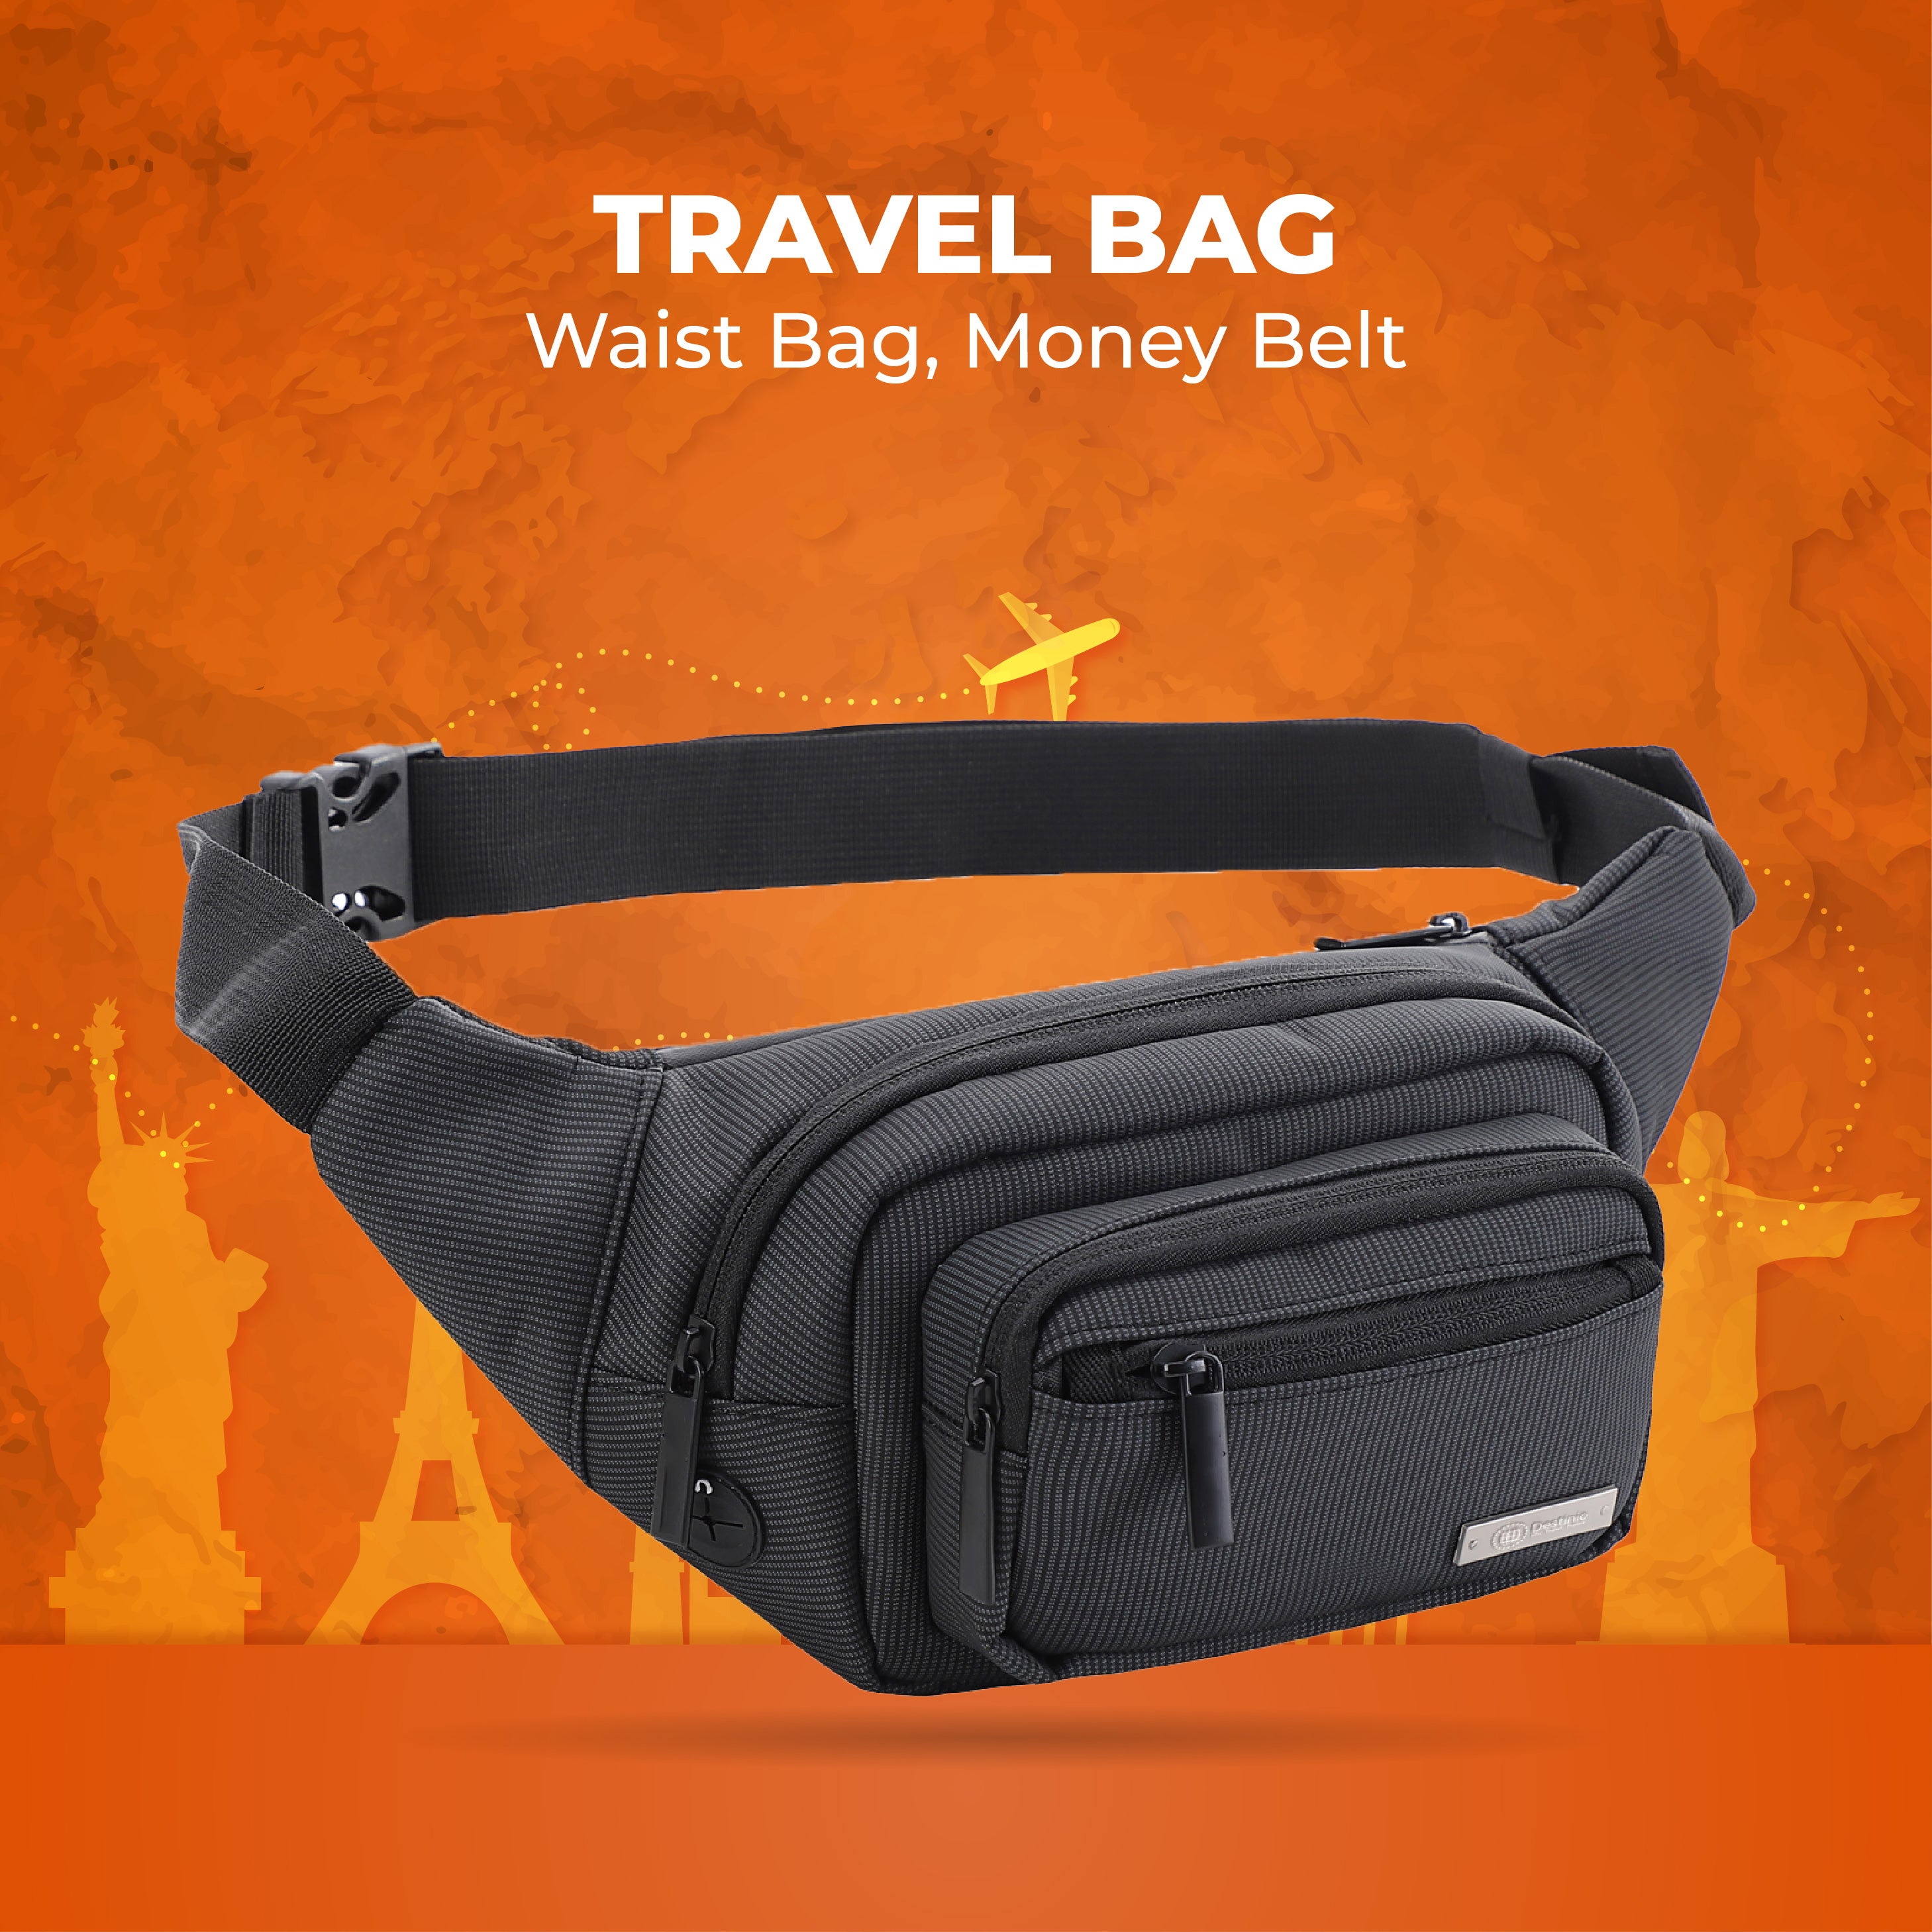 Travel Bag Travel Accessories Online at Destinio